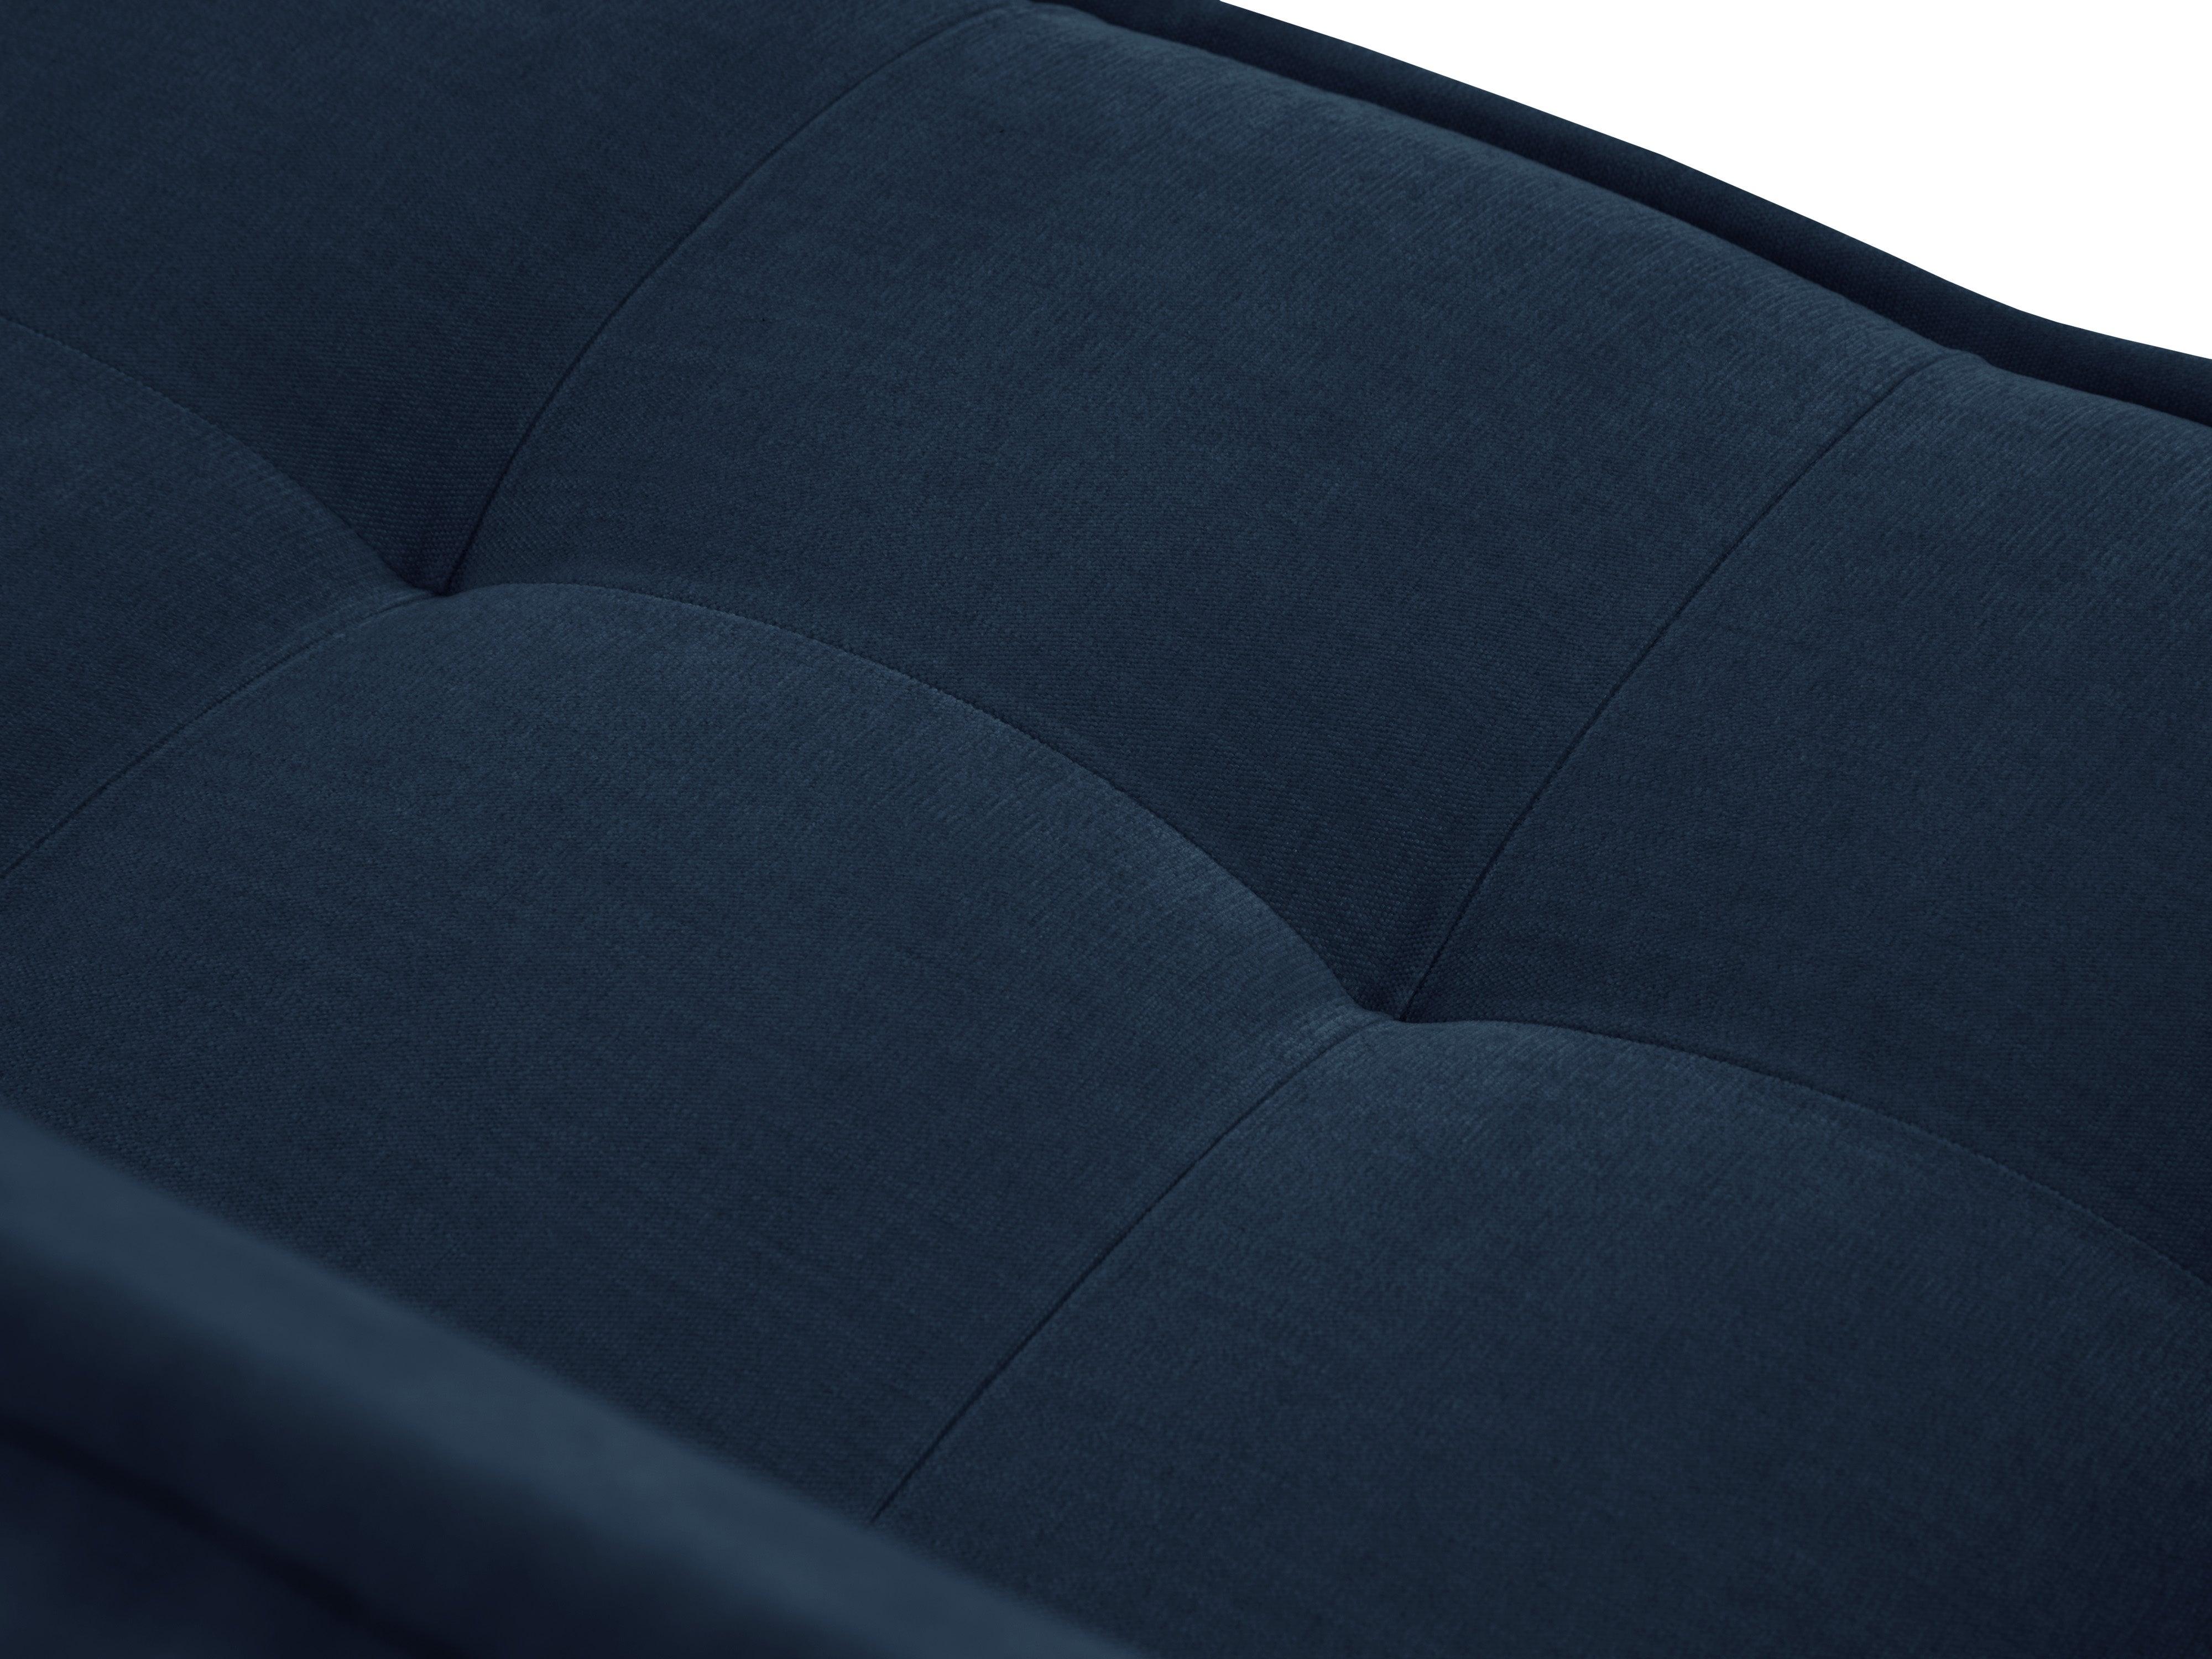 Sofa otwarta 2-osobowa VERLET niebieski Interieurs 86    Eye on Design